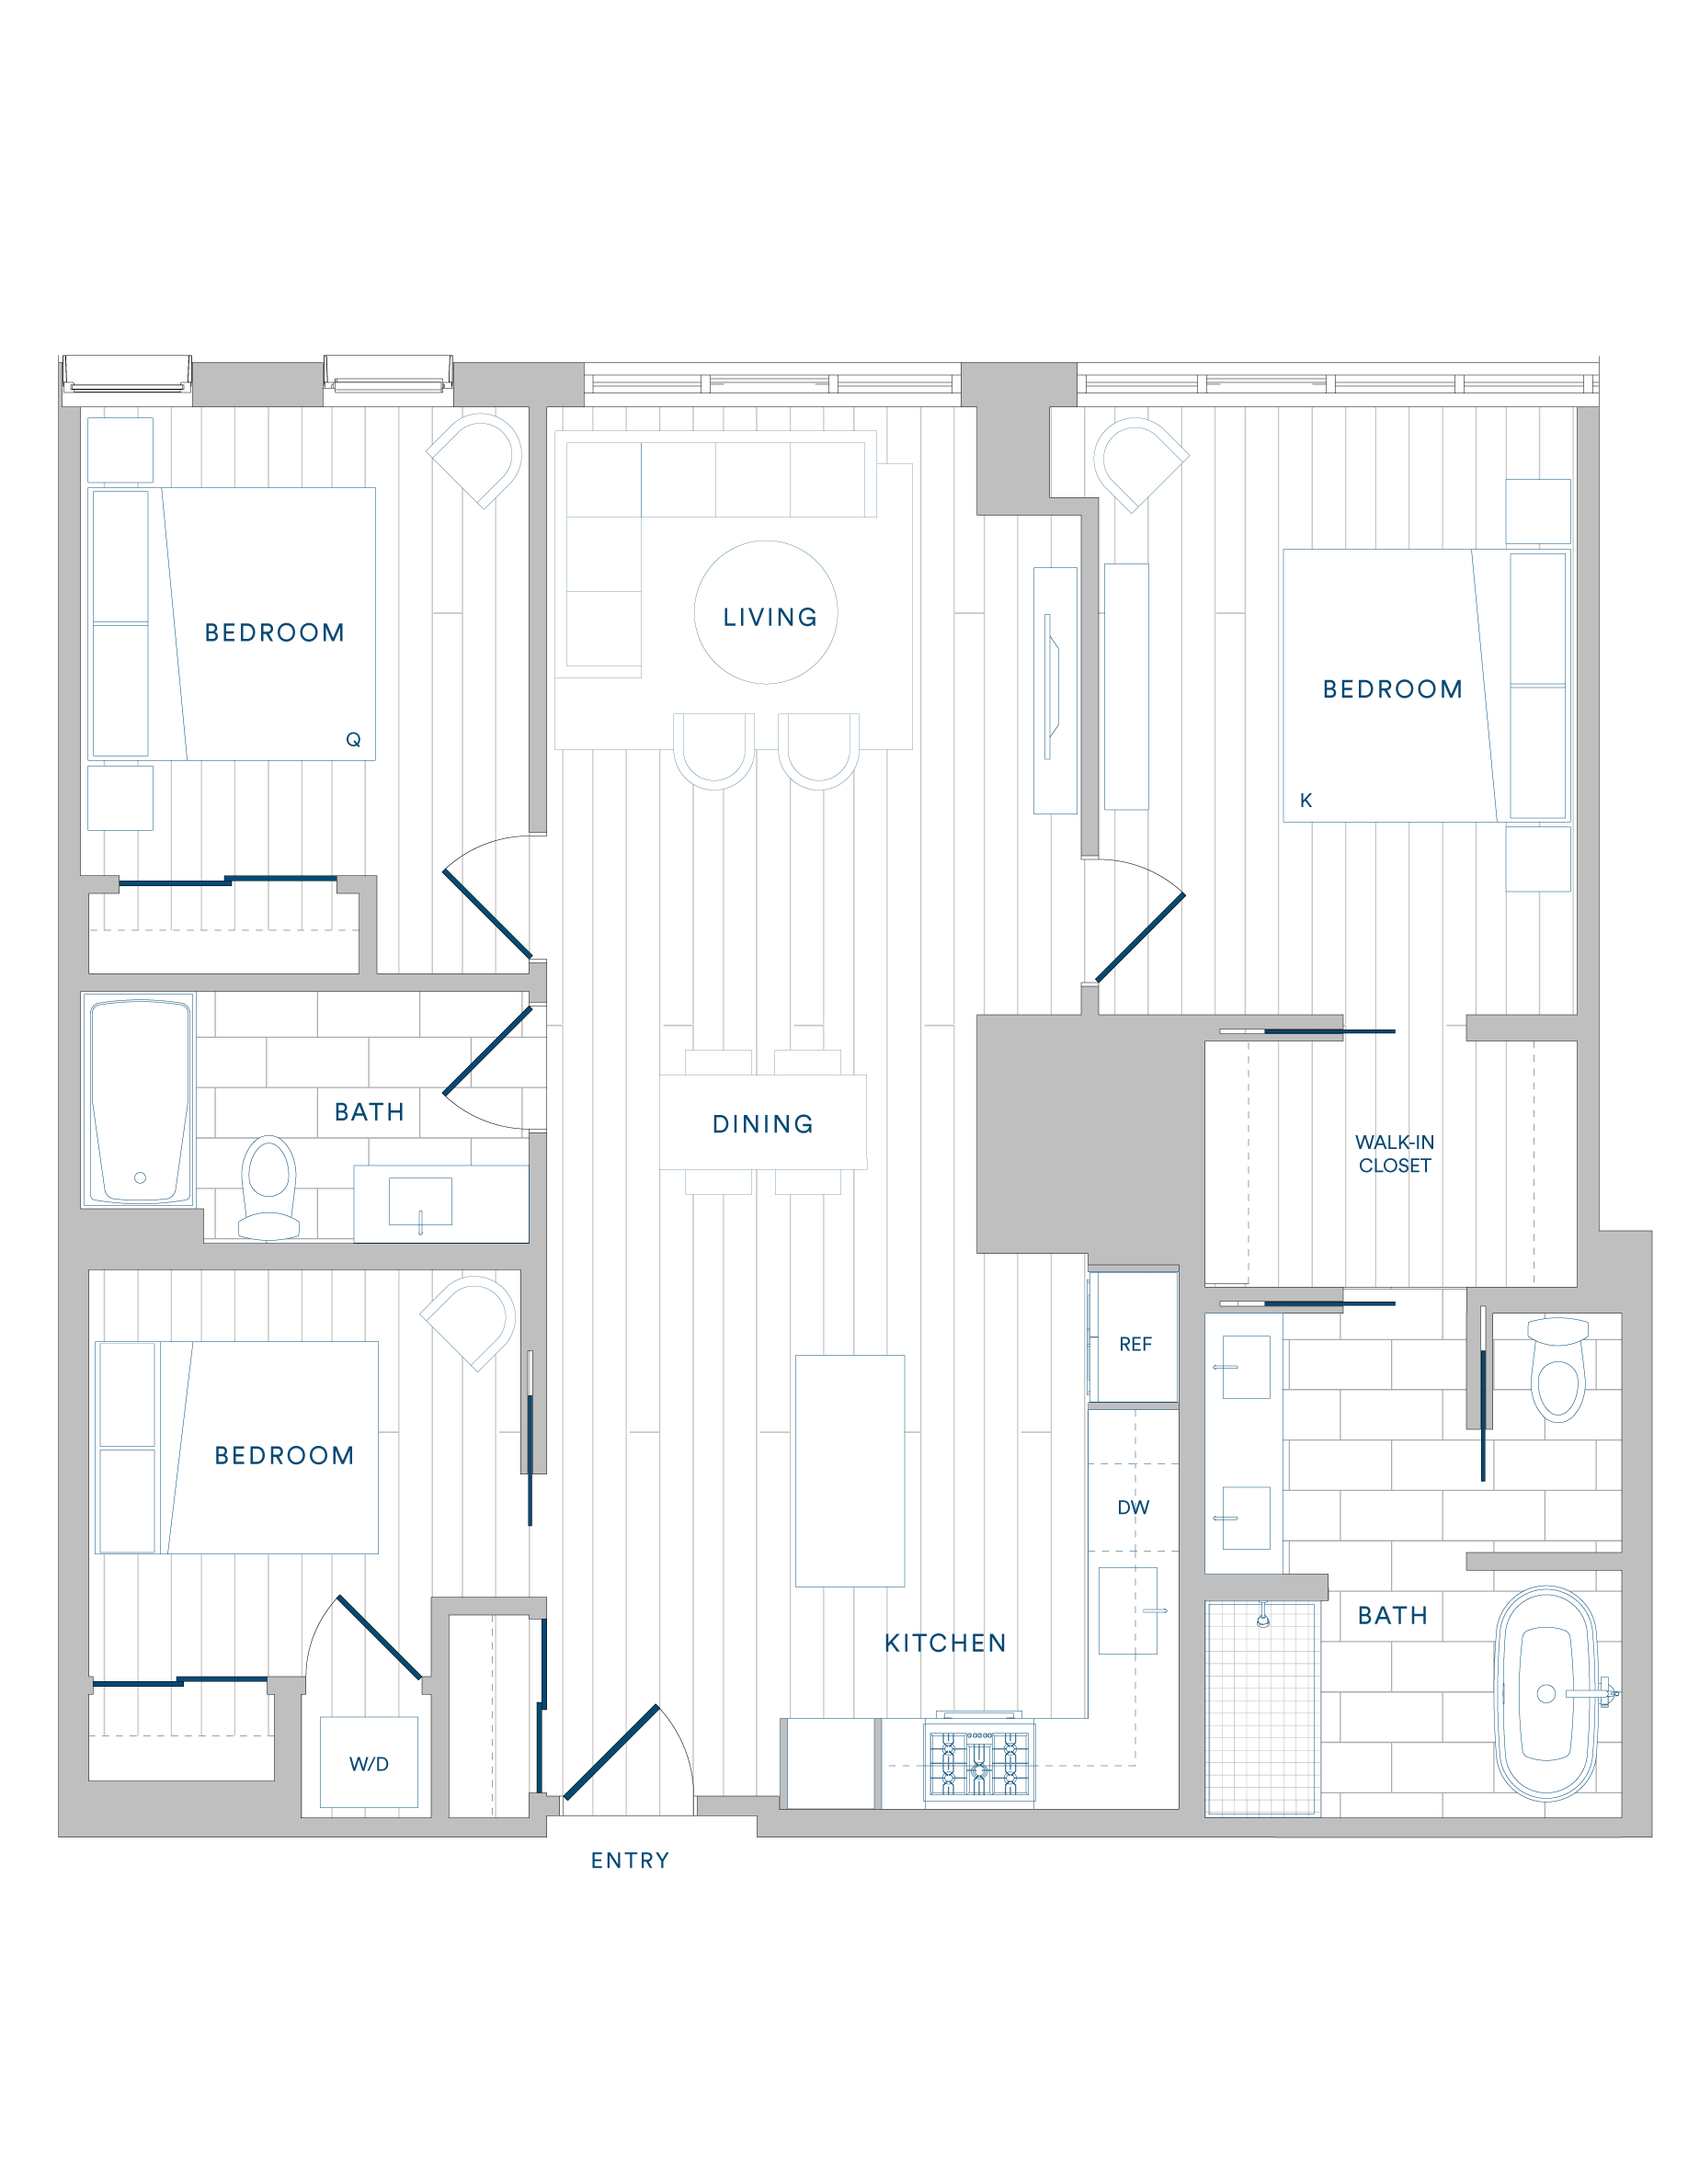 Floorplan for Apartment #1310, 2 bedroom unit at Margarite